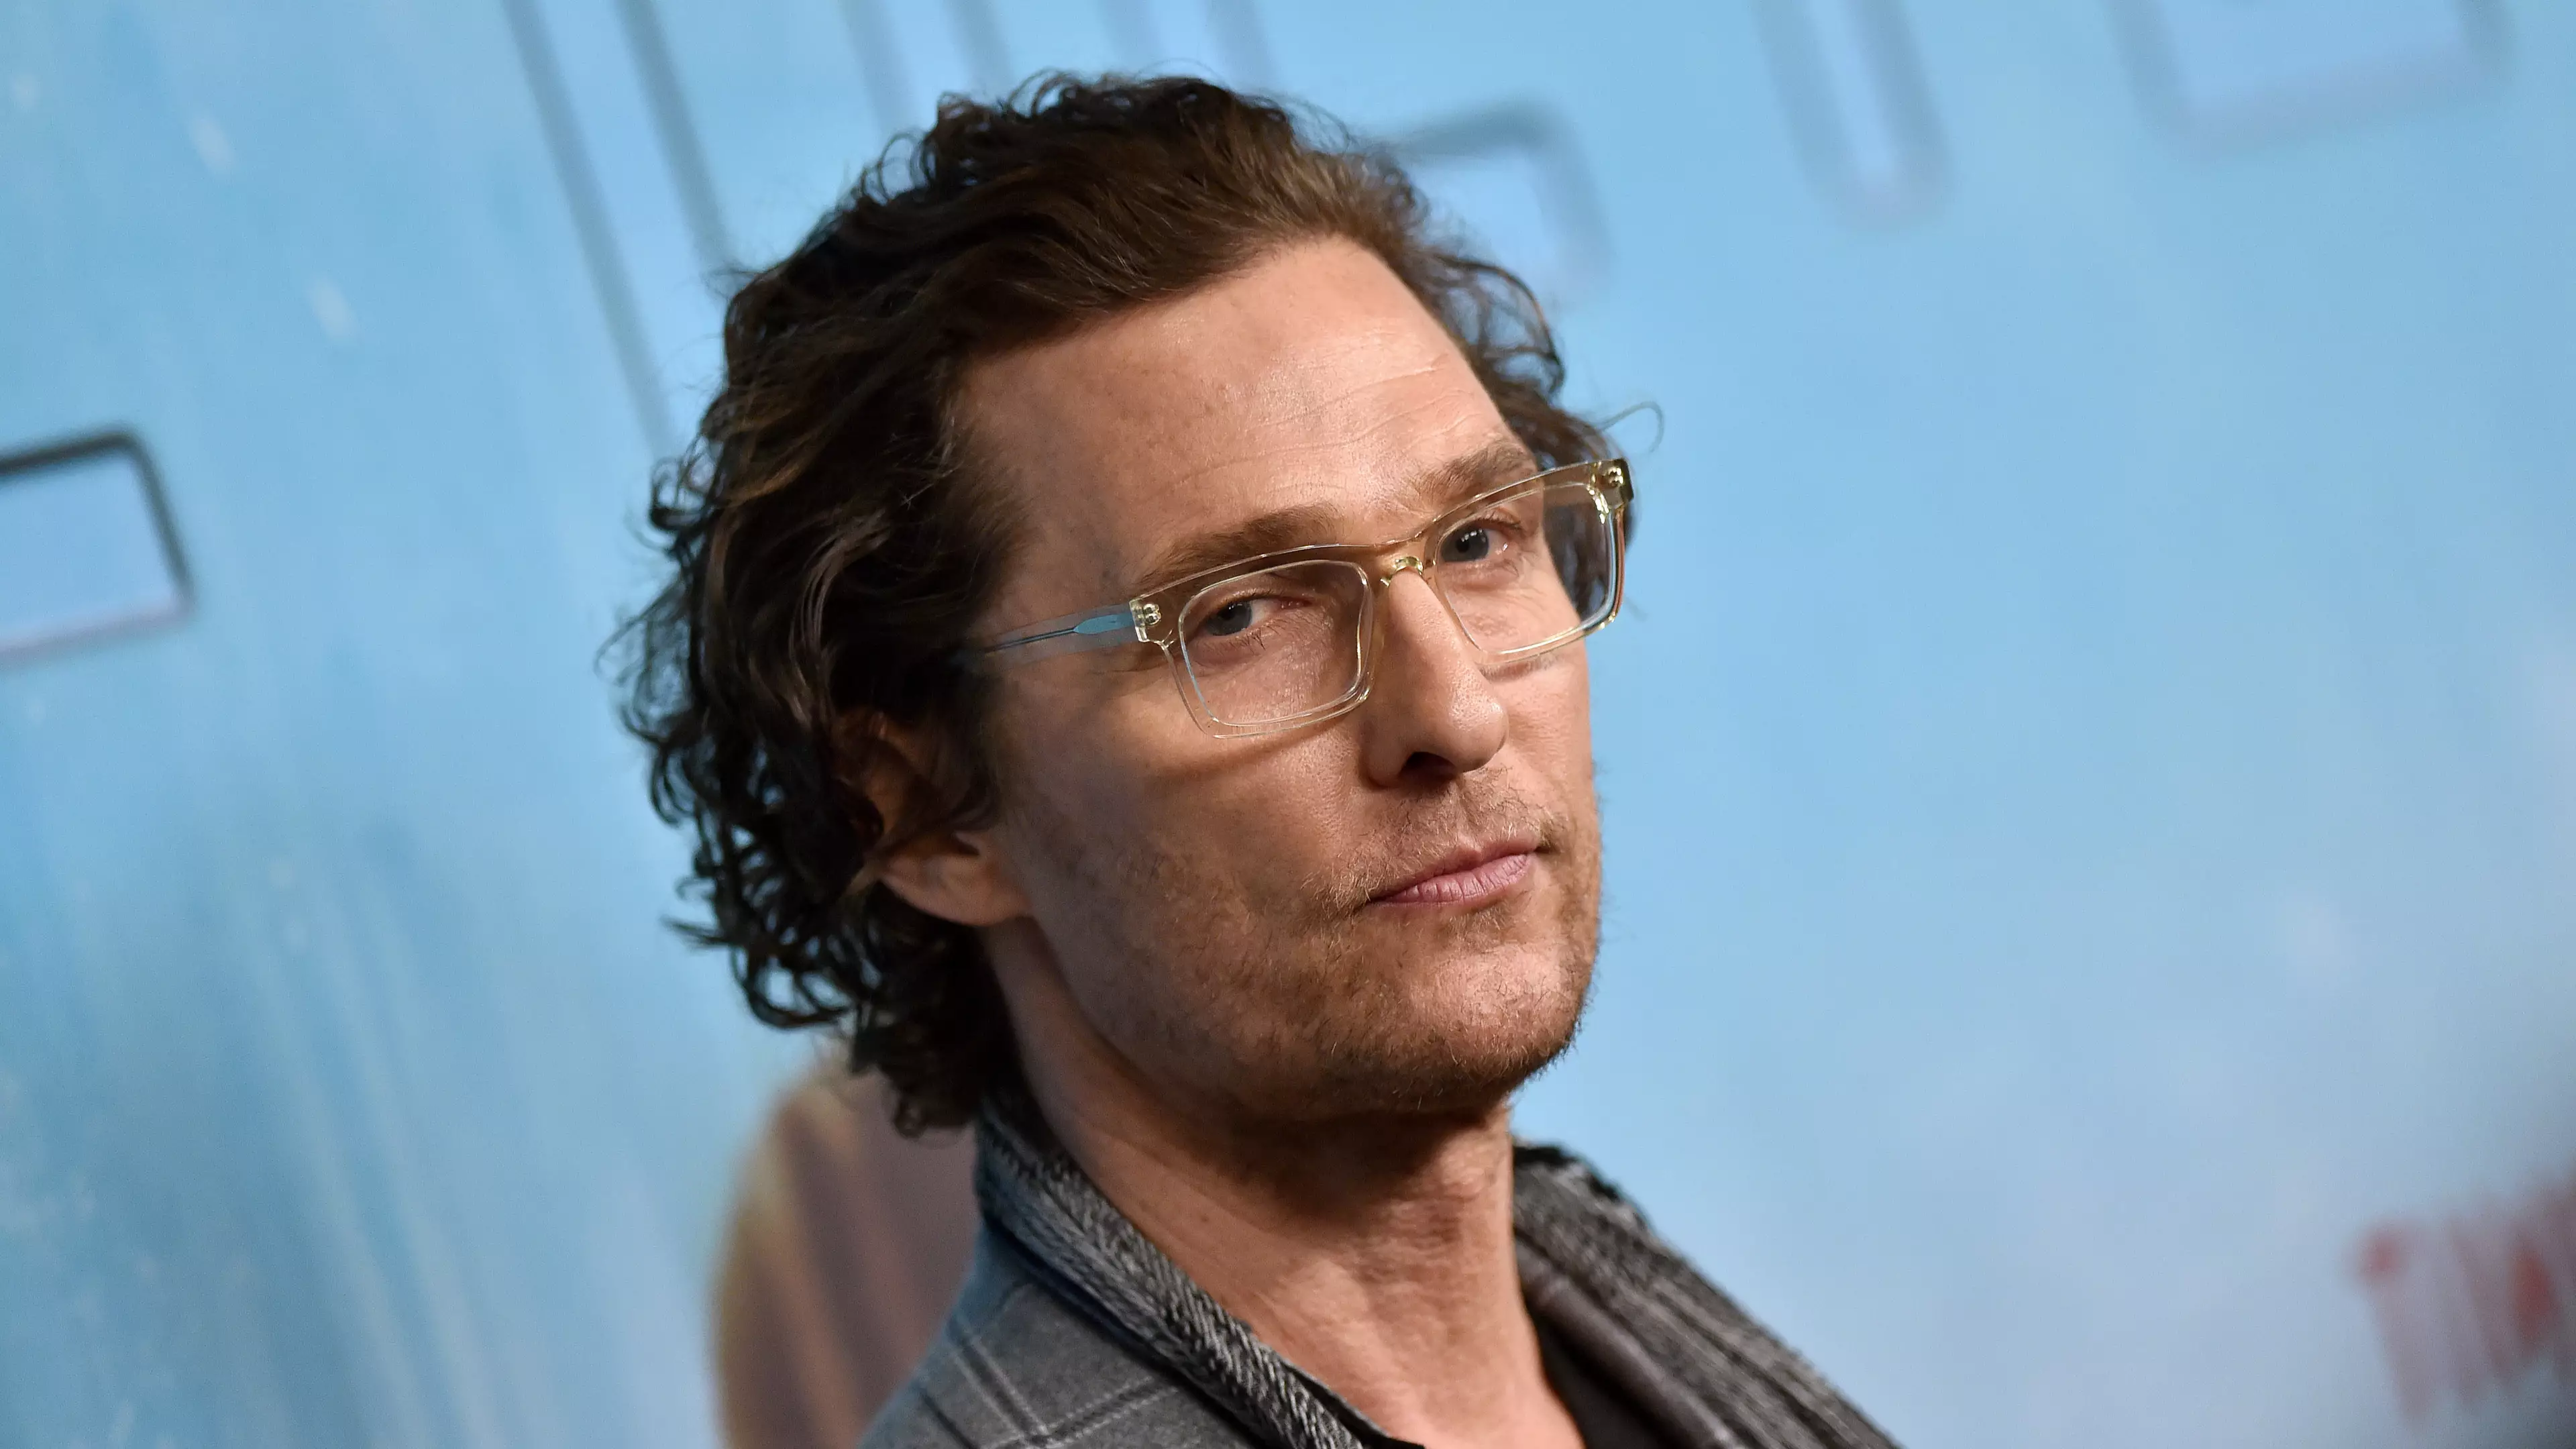 Matthew McConaughey And True Detective Writer Nic Pizzolatto To Reunite For New Show